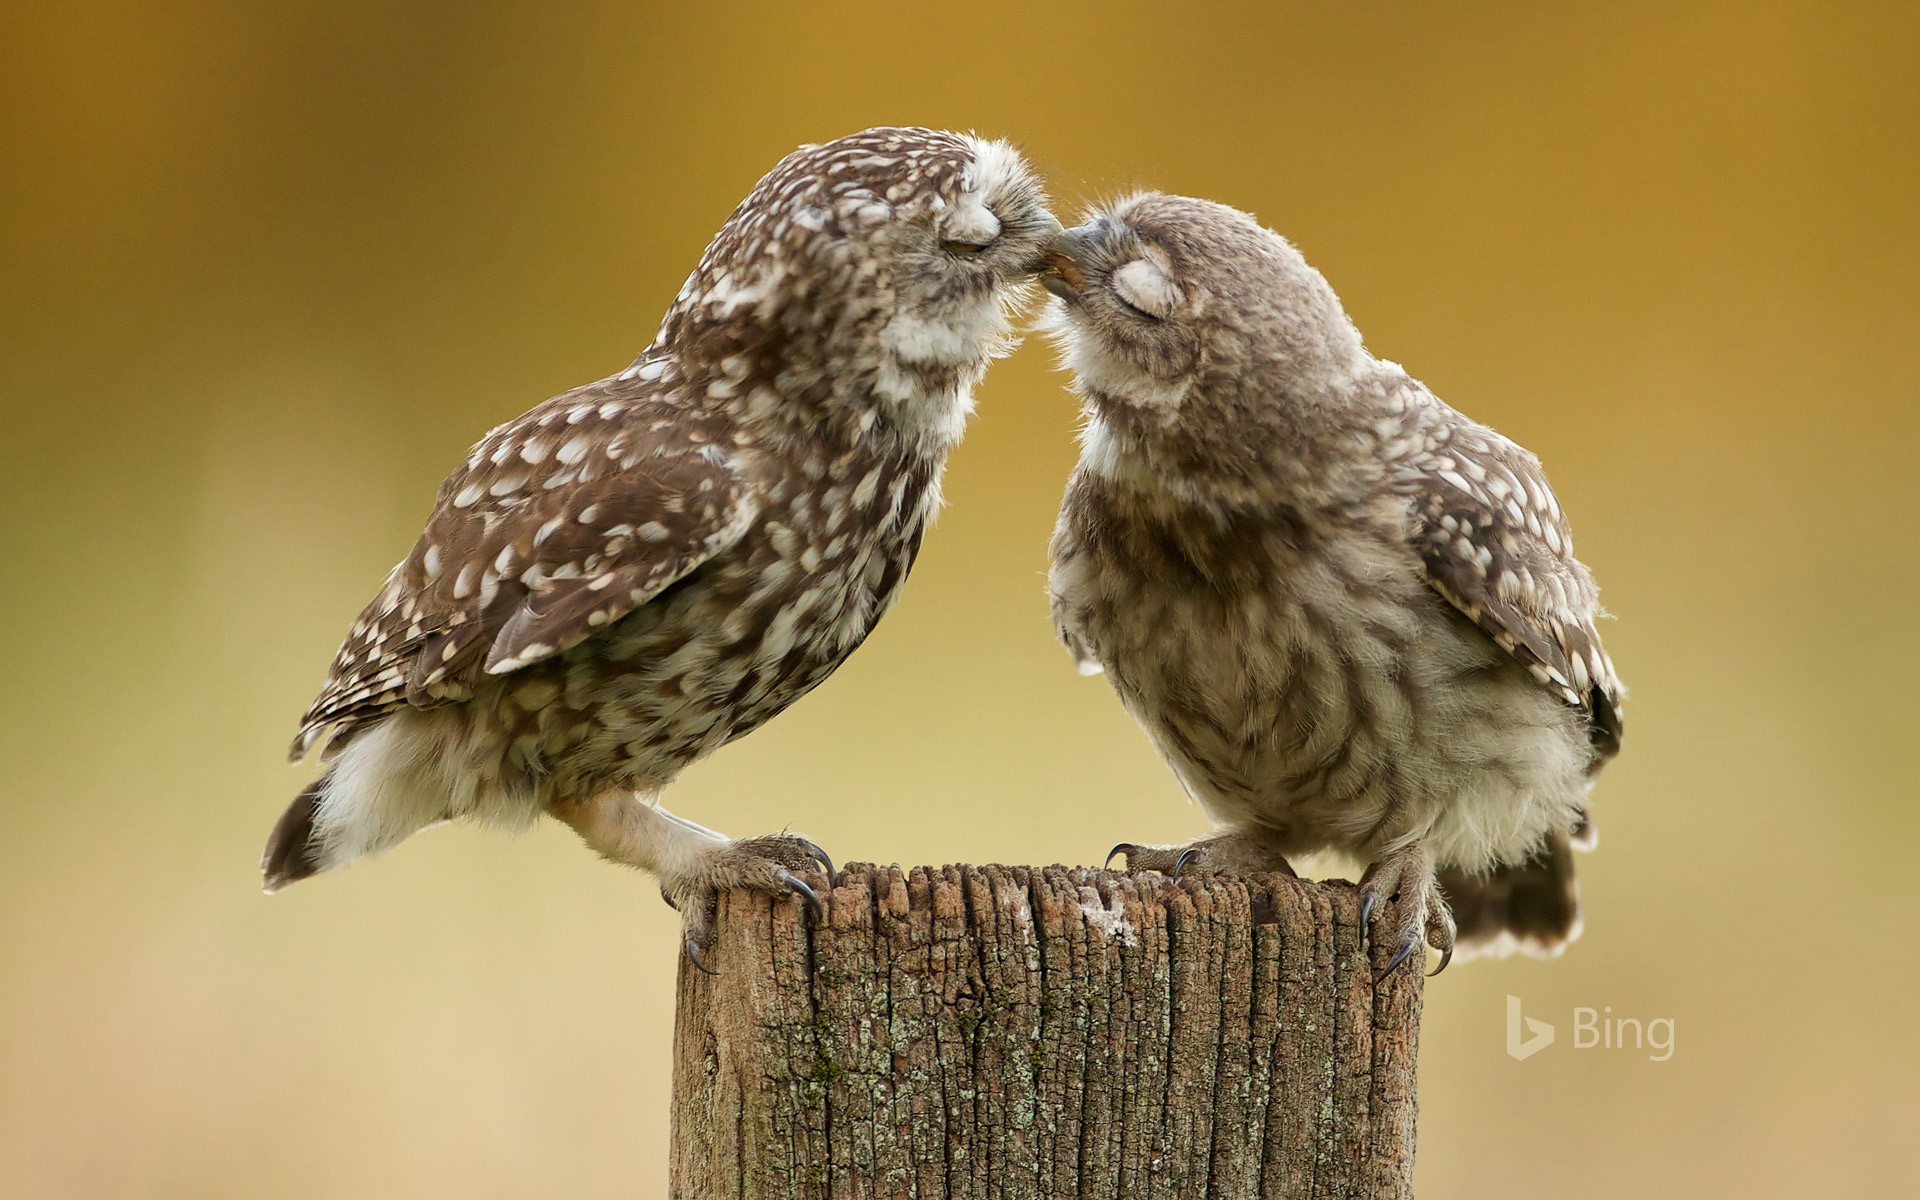 Burrowing owl chicks